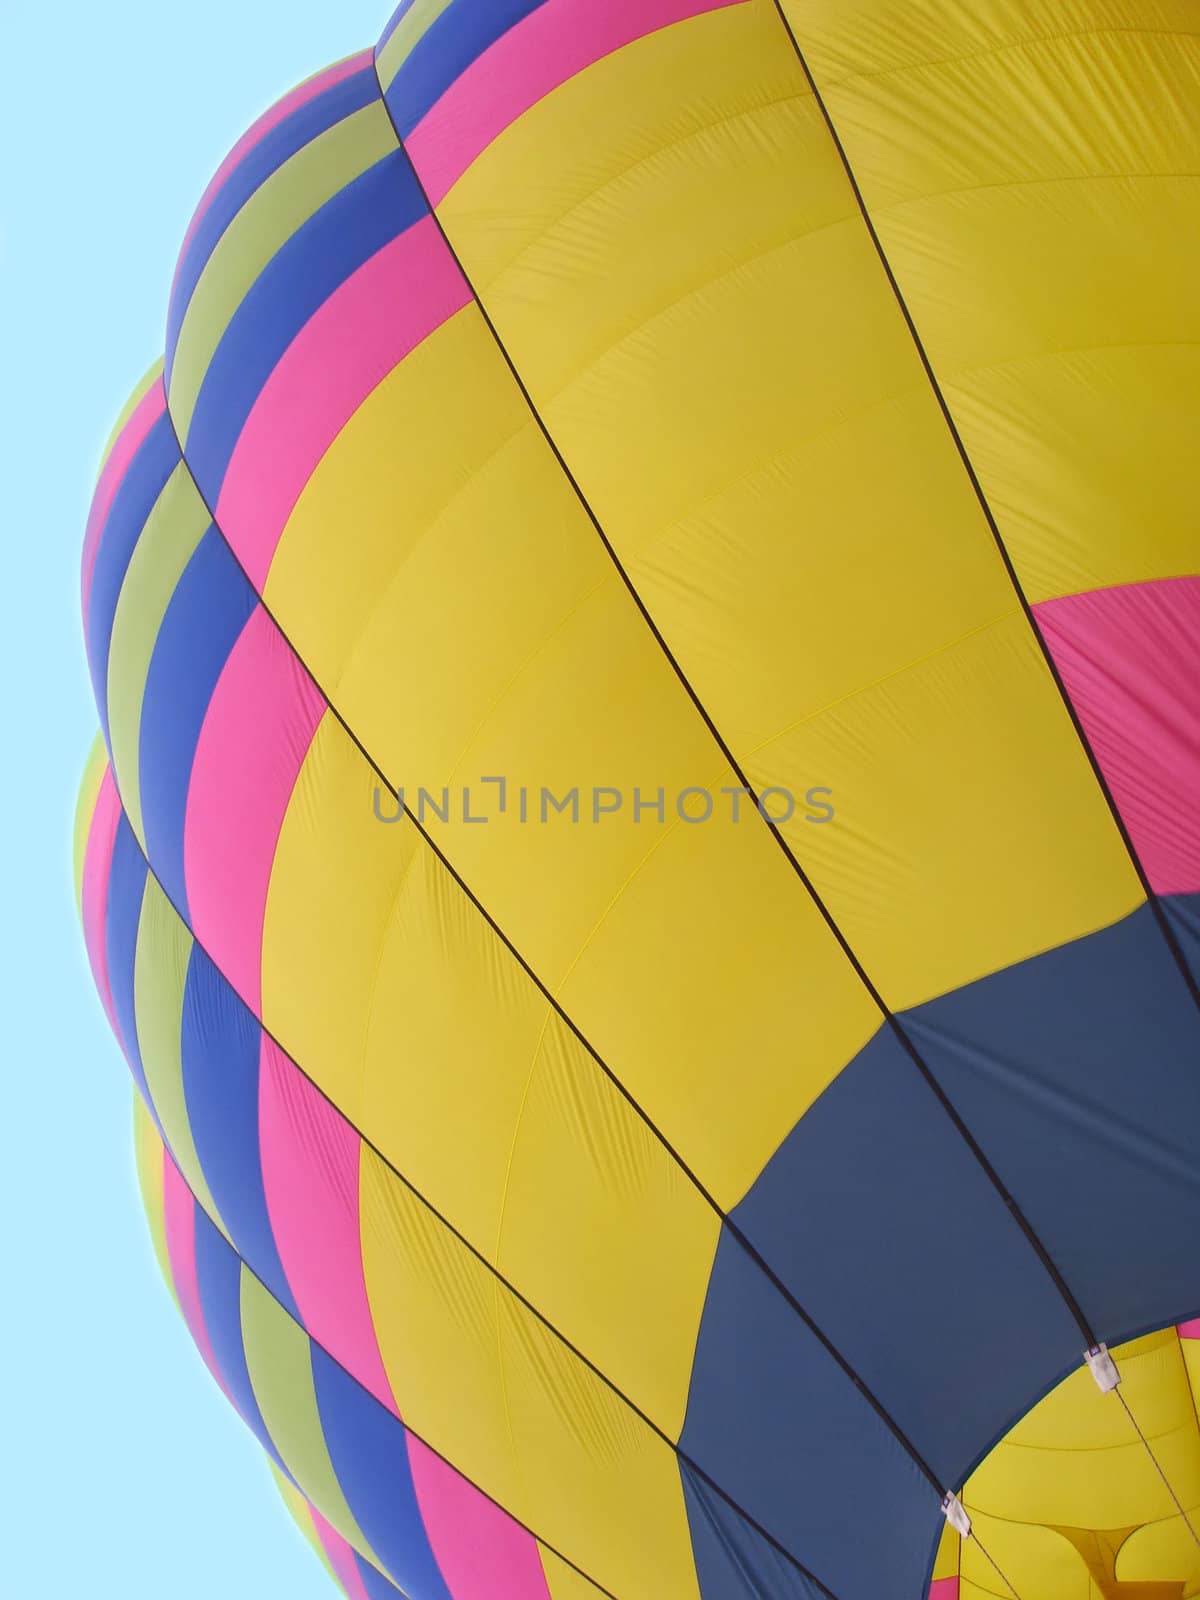 Hot Air Balloon Segment Against Blue Sky by goldenangel